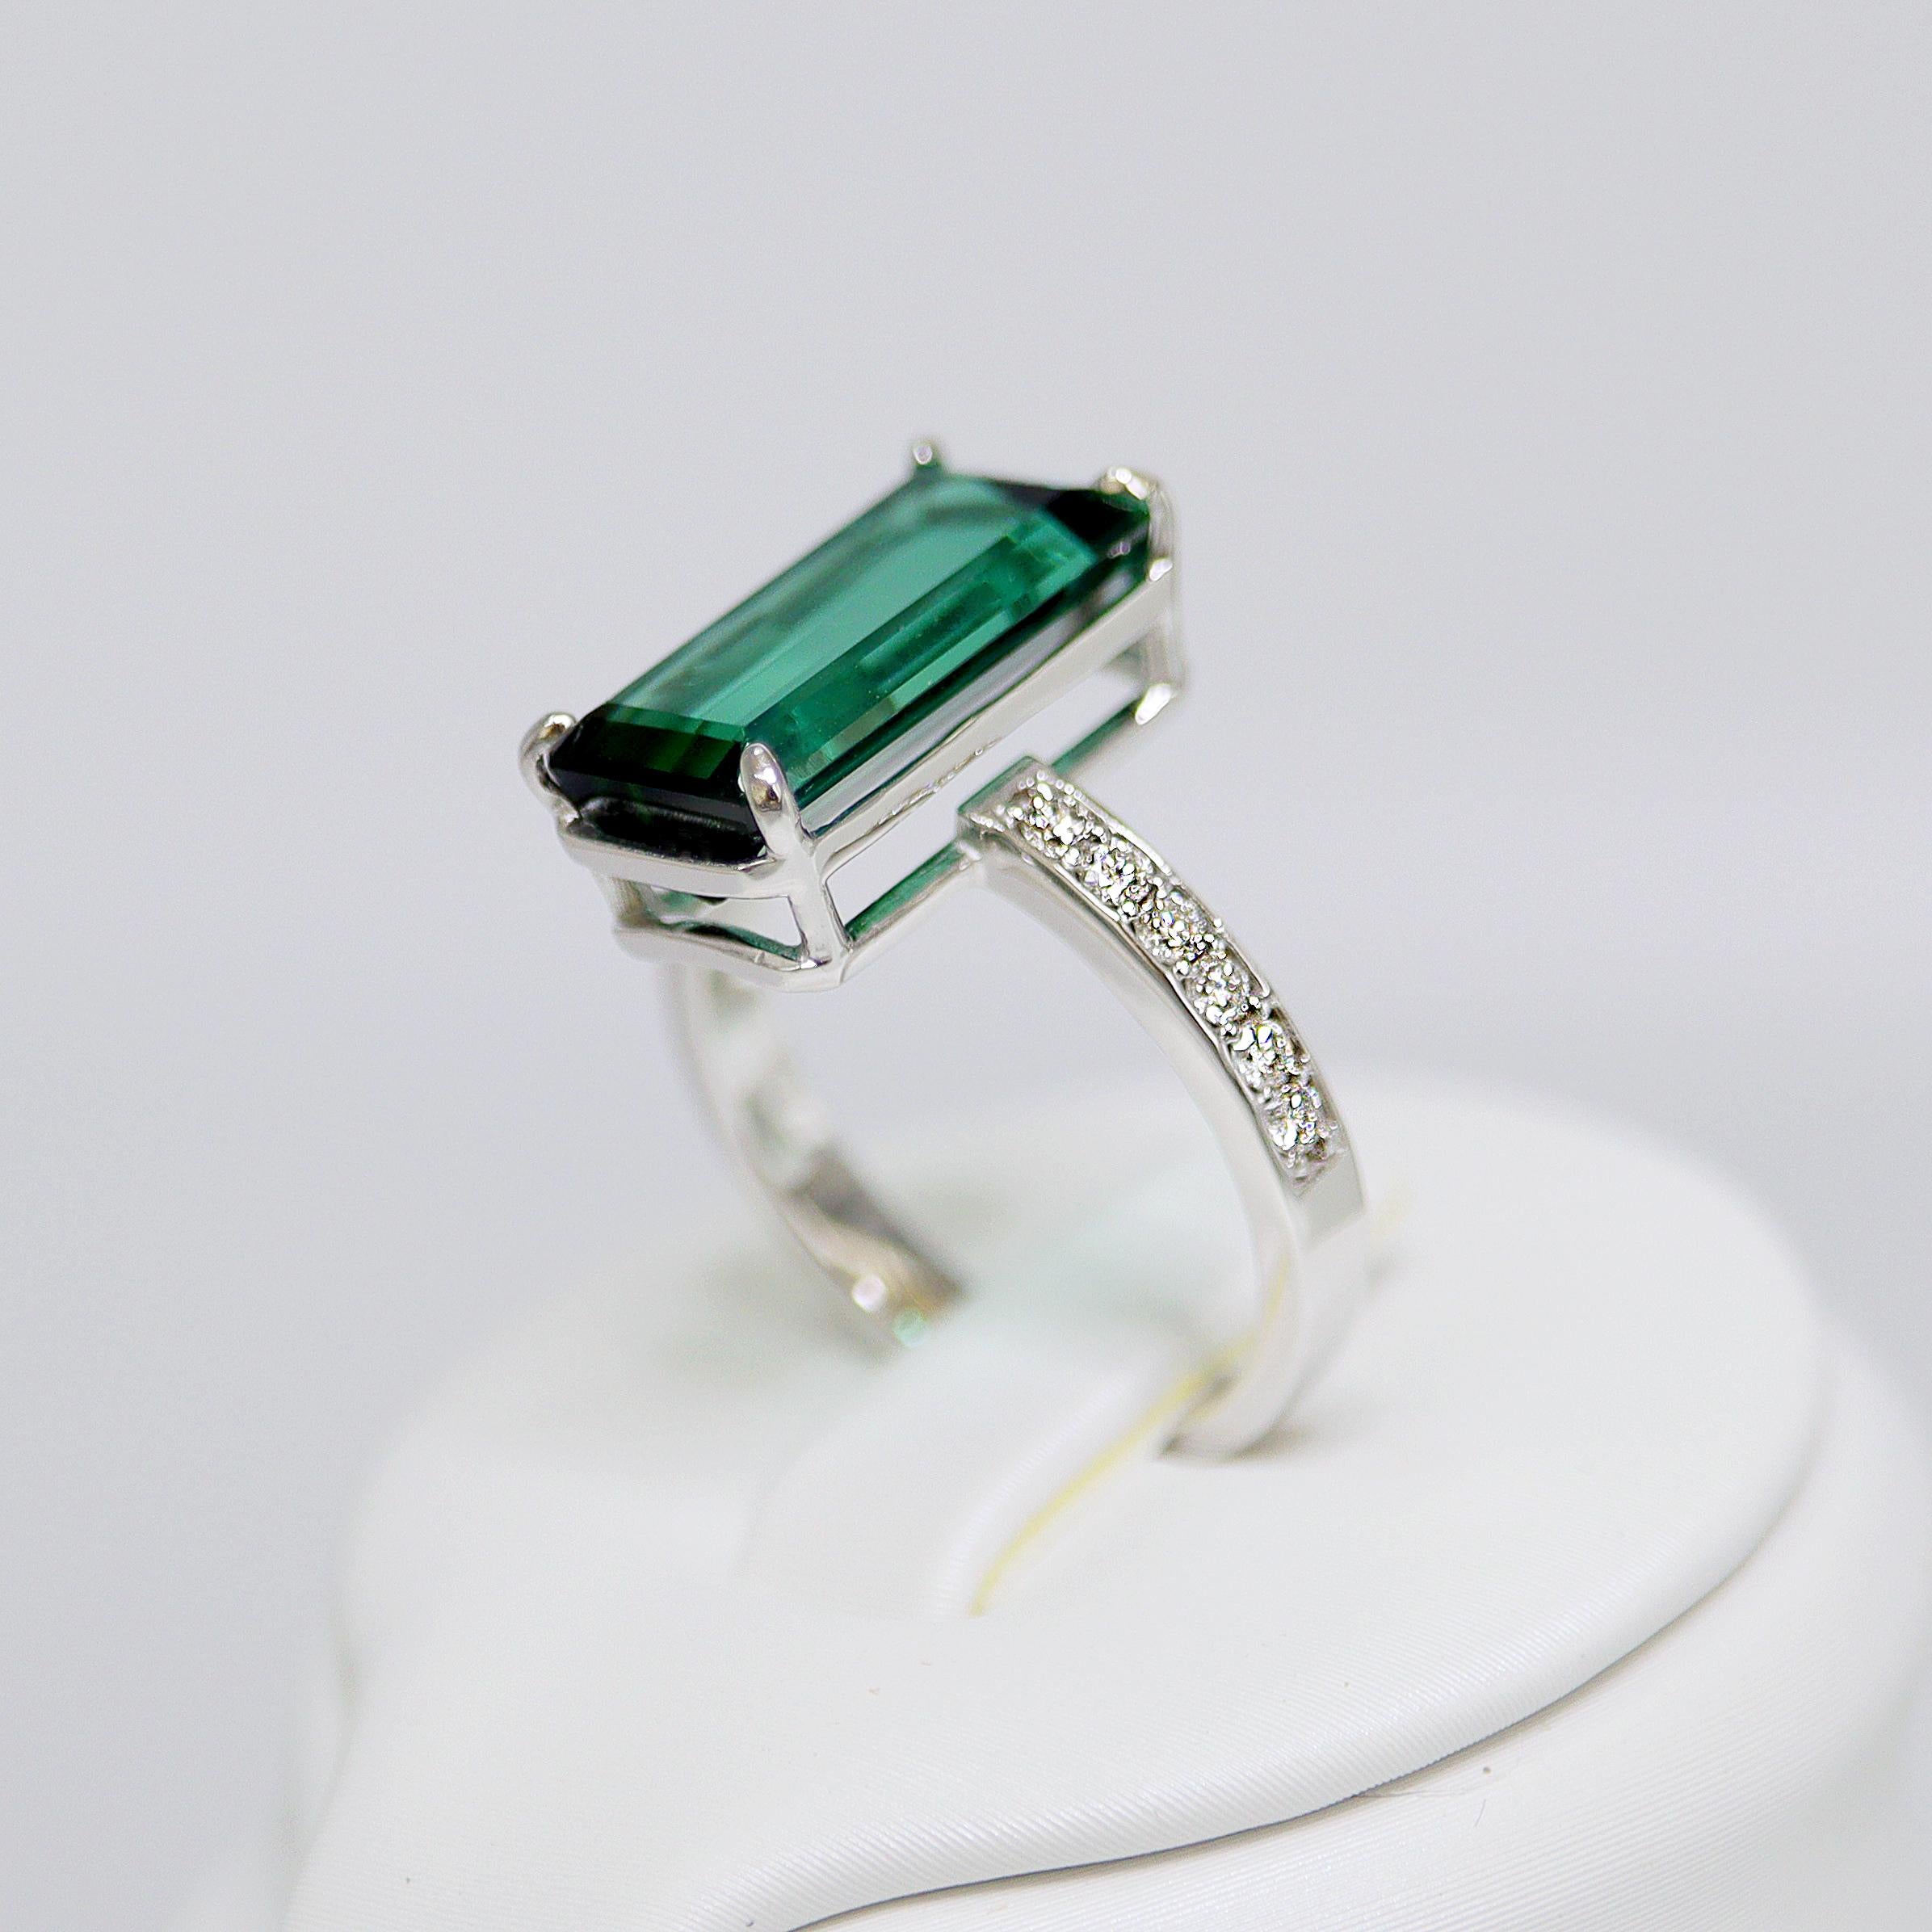 Emerald Cut IGI 18k 5.17 Carat Tourmaline Antique Art Deco Style Engagement Ring